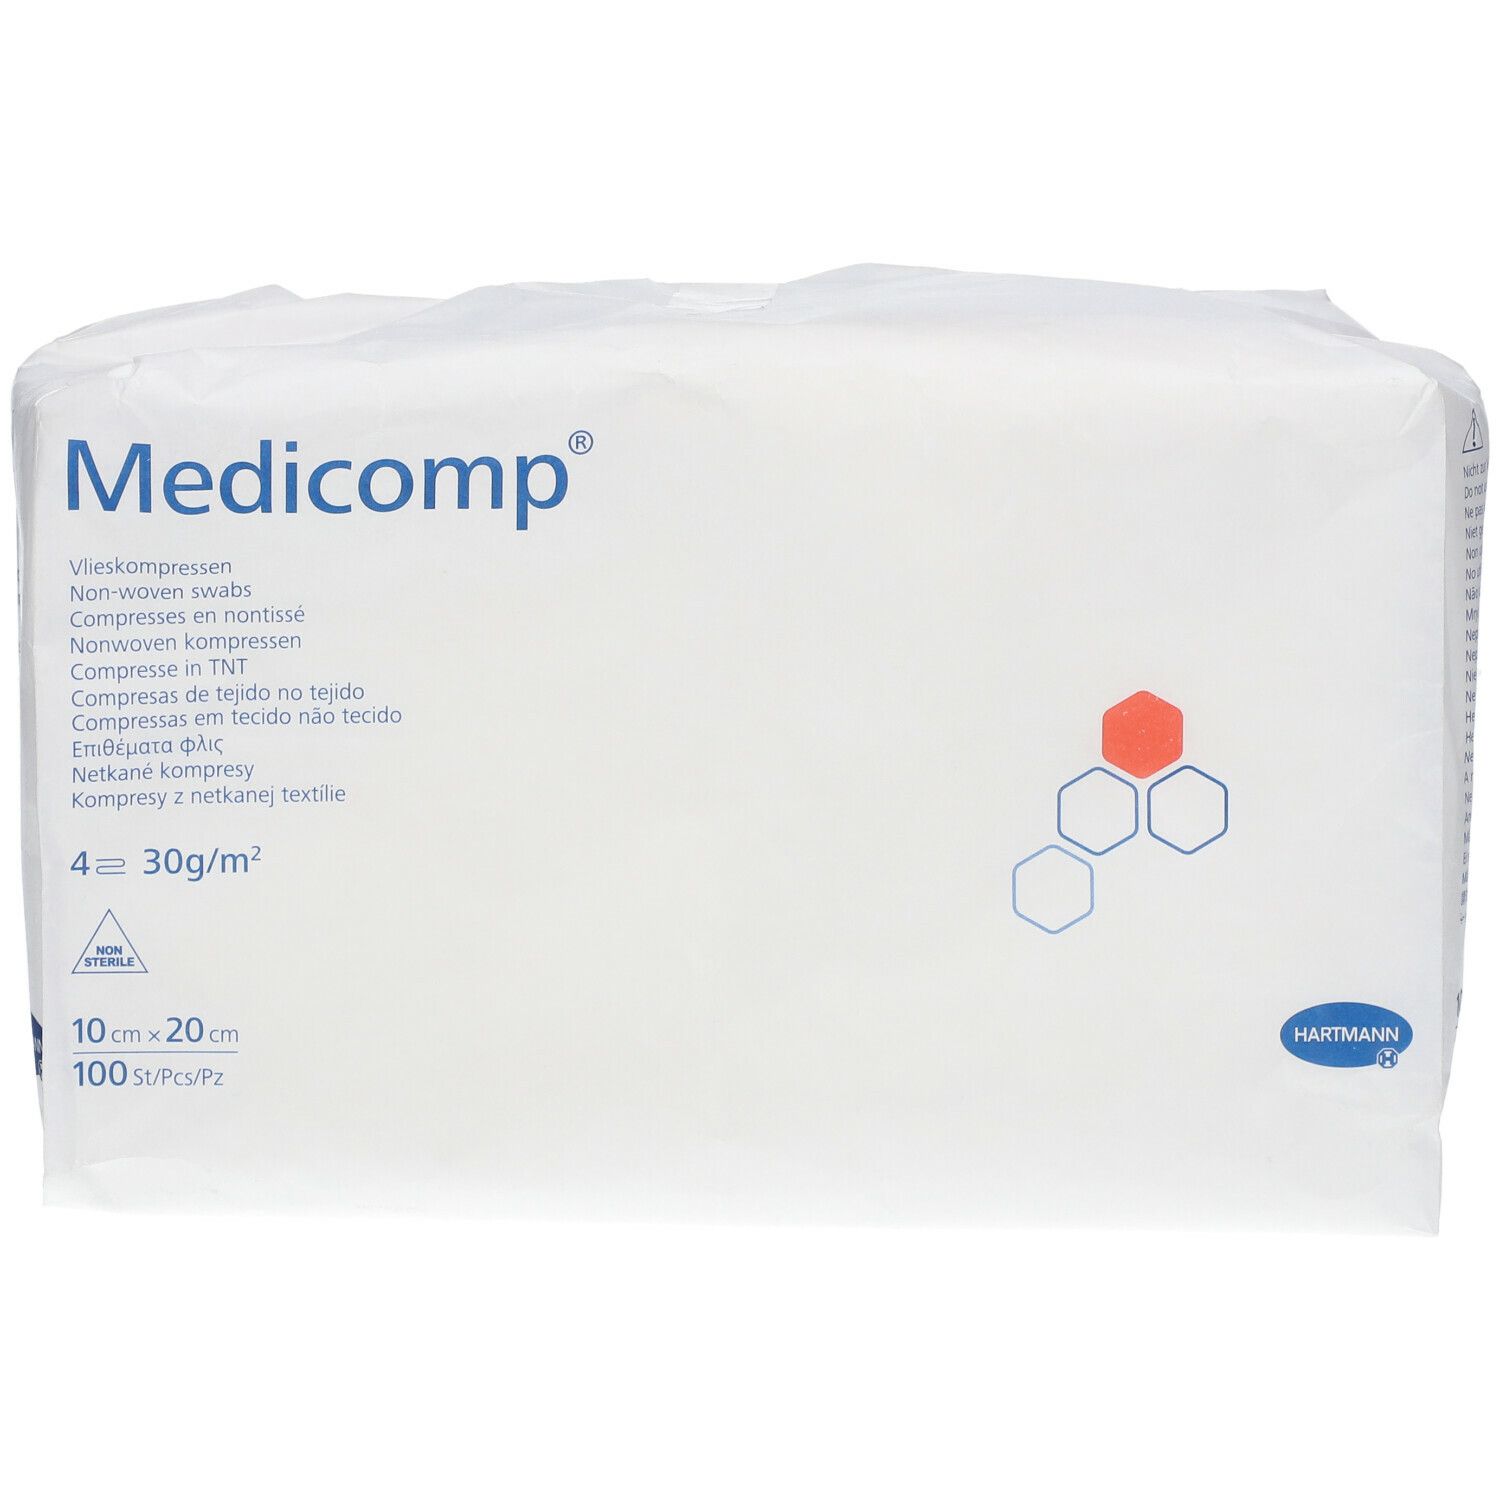 HARTMANN Medicomp® Compresse 4 Strati 10 x 20cm